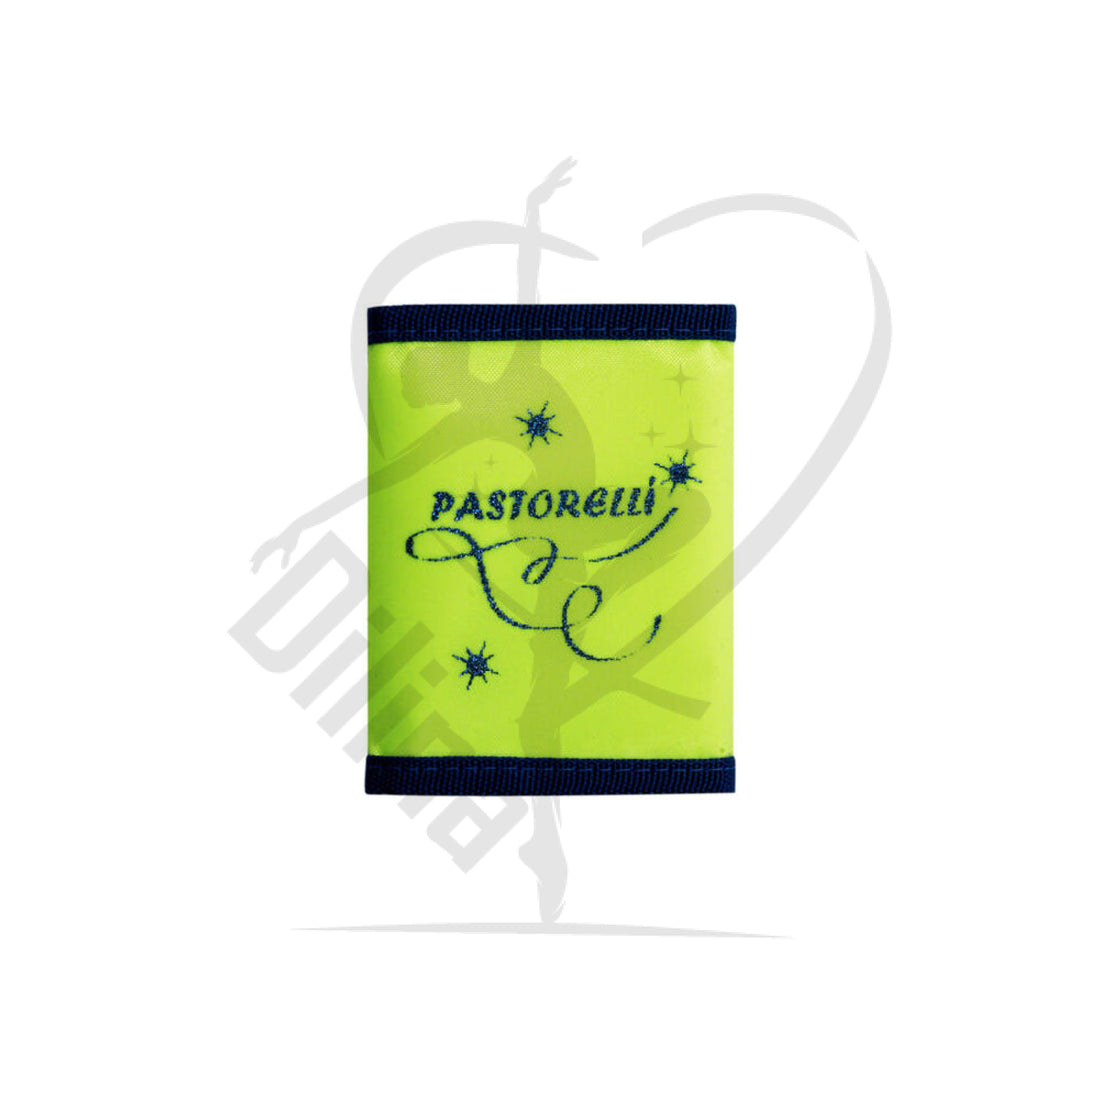 Pastorelli Purse Ribbon Winder Fluo Yellow Accessories